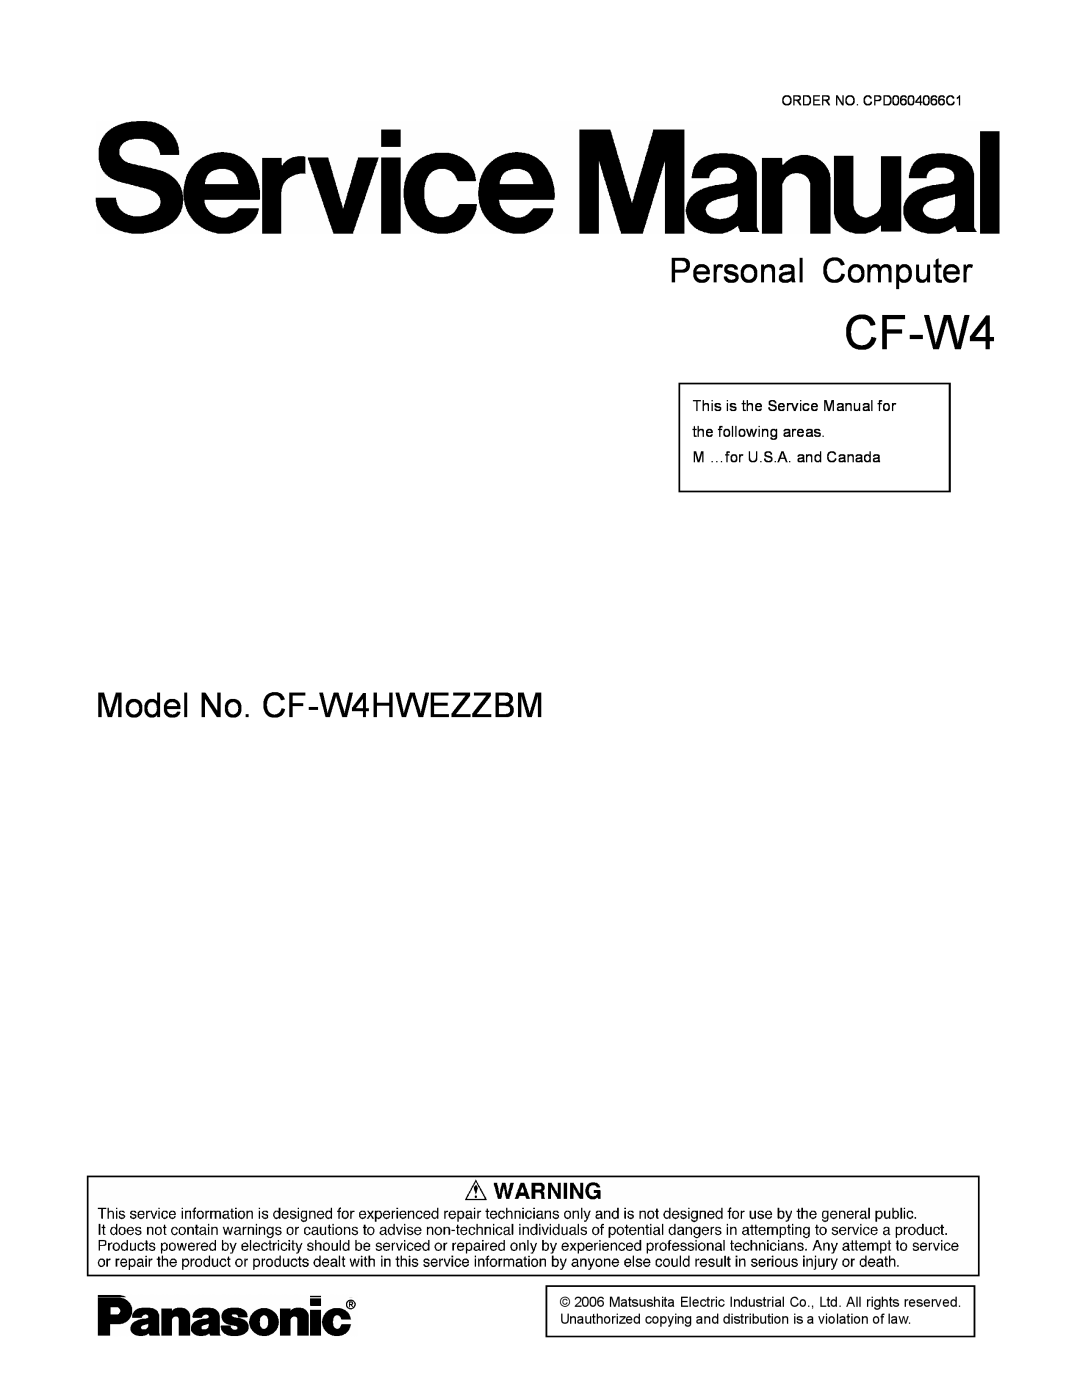 Matsushita service manual Personal Computer, Model No. CF-W4HWEZZBM 